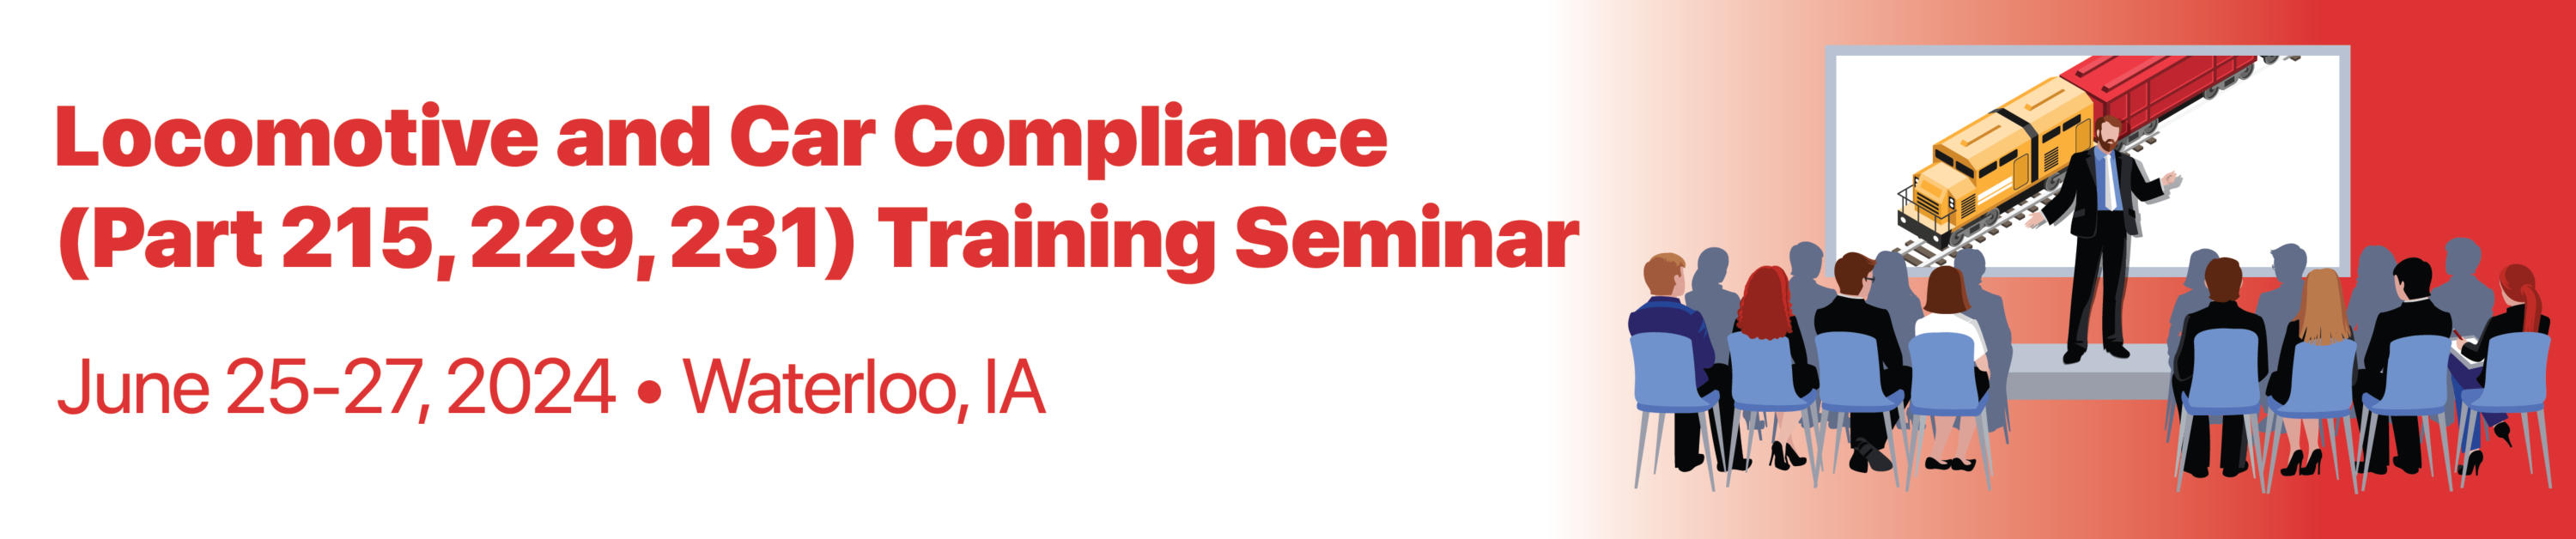 ASLRRA 2024 locomotive and car compliance seminar